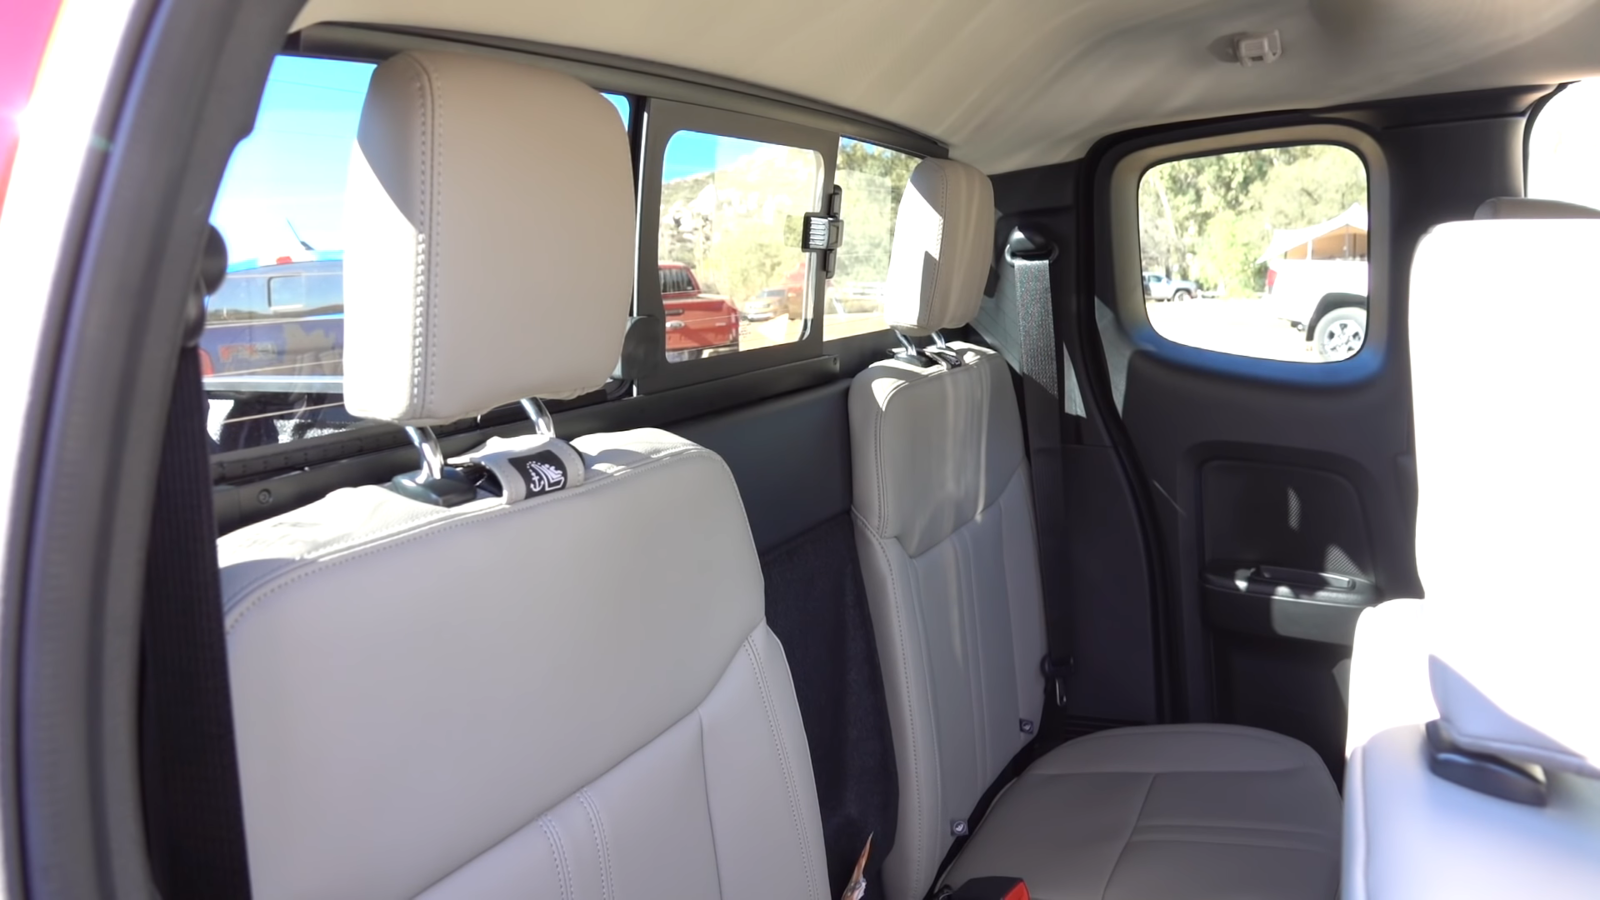 Ford Ranger Lariat Medium Stone Leather Interior Driven- 2019 Ford Ranger Lariat SuperCrew 4X4 4-8 screenshot